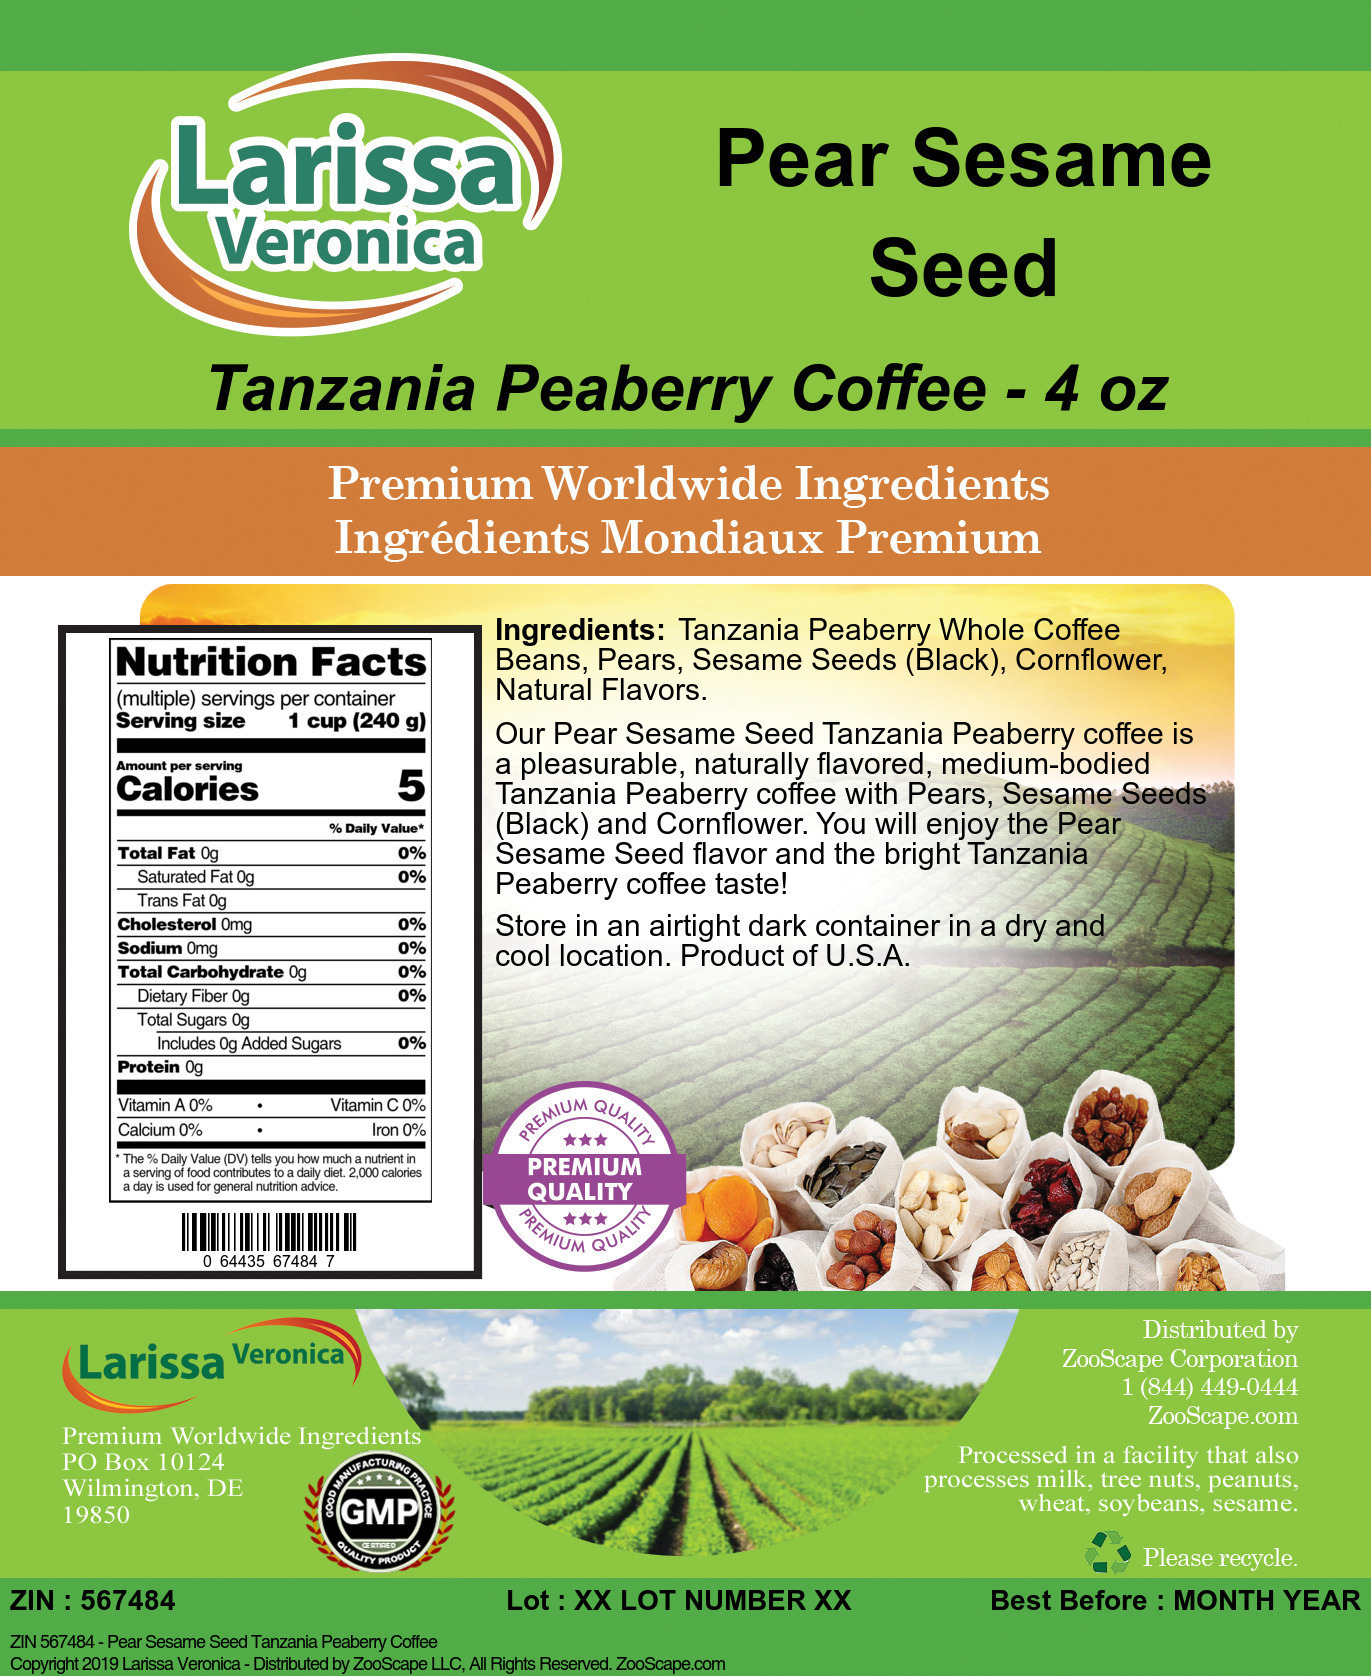 Pear Sesame Seed Tanzania Peaberry Coffee - Label